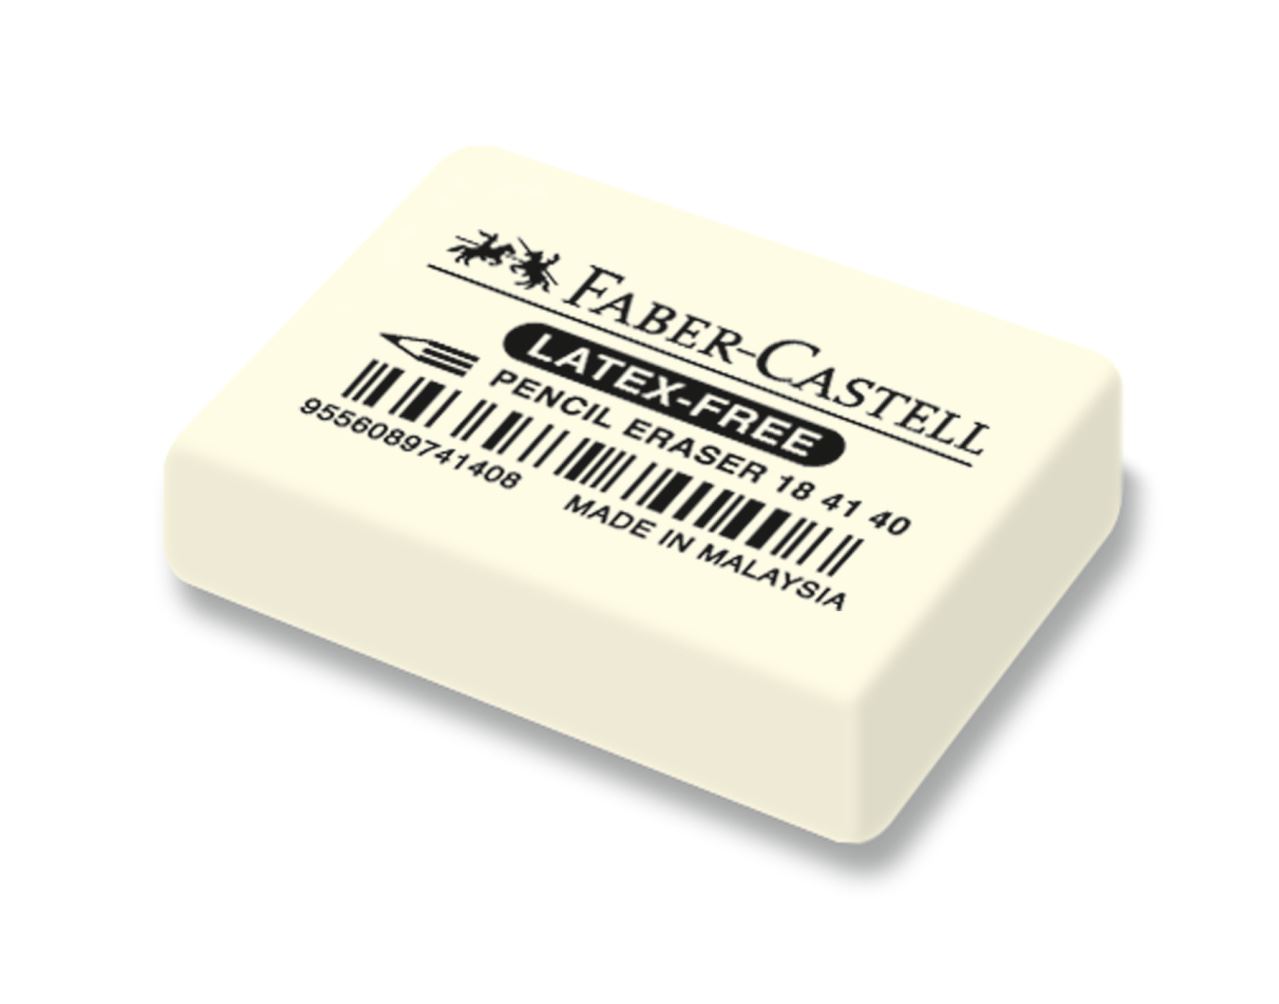 Faber-Castell - 7041-40 latex-free eraser